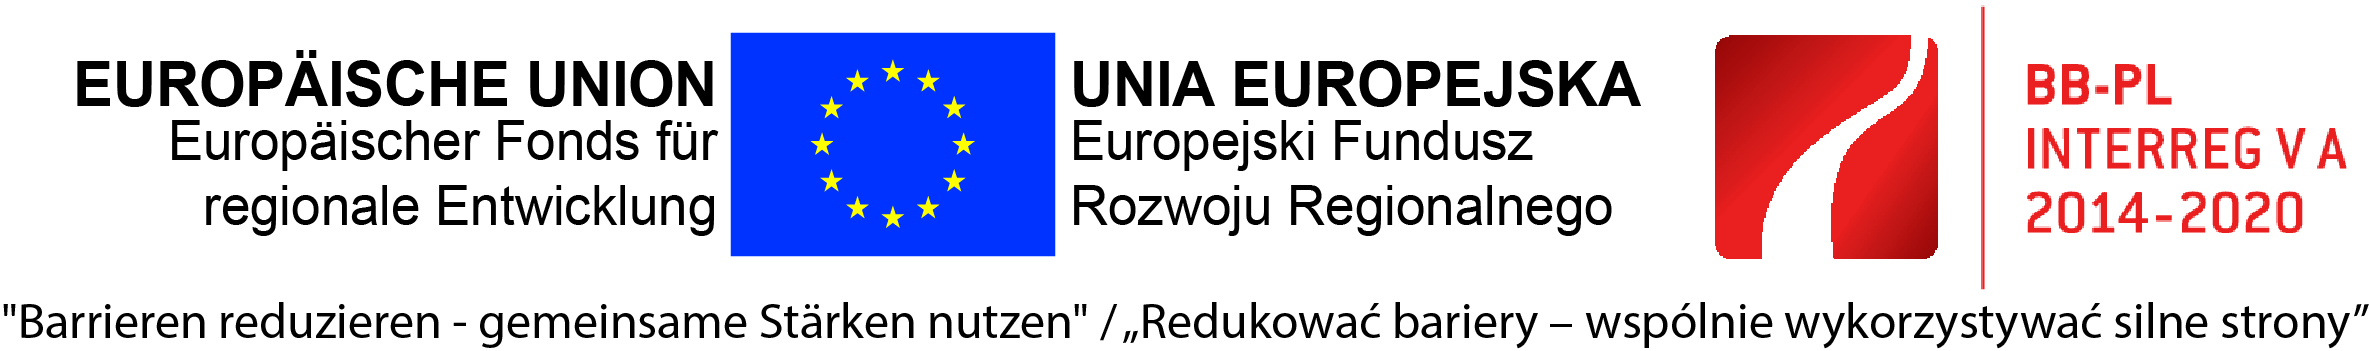 Logo Interreg VA Brandenburg-Lubuskie 2014-2020